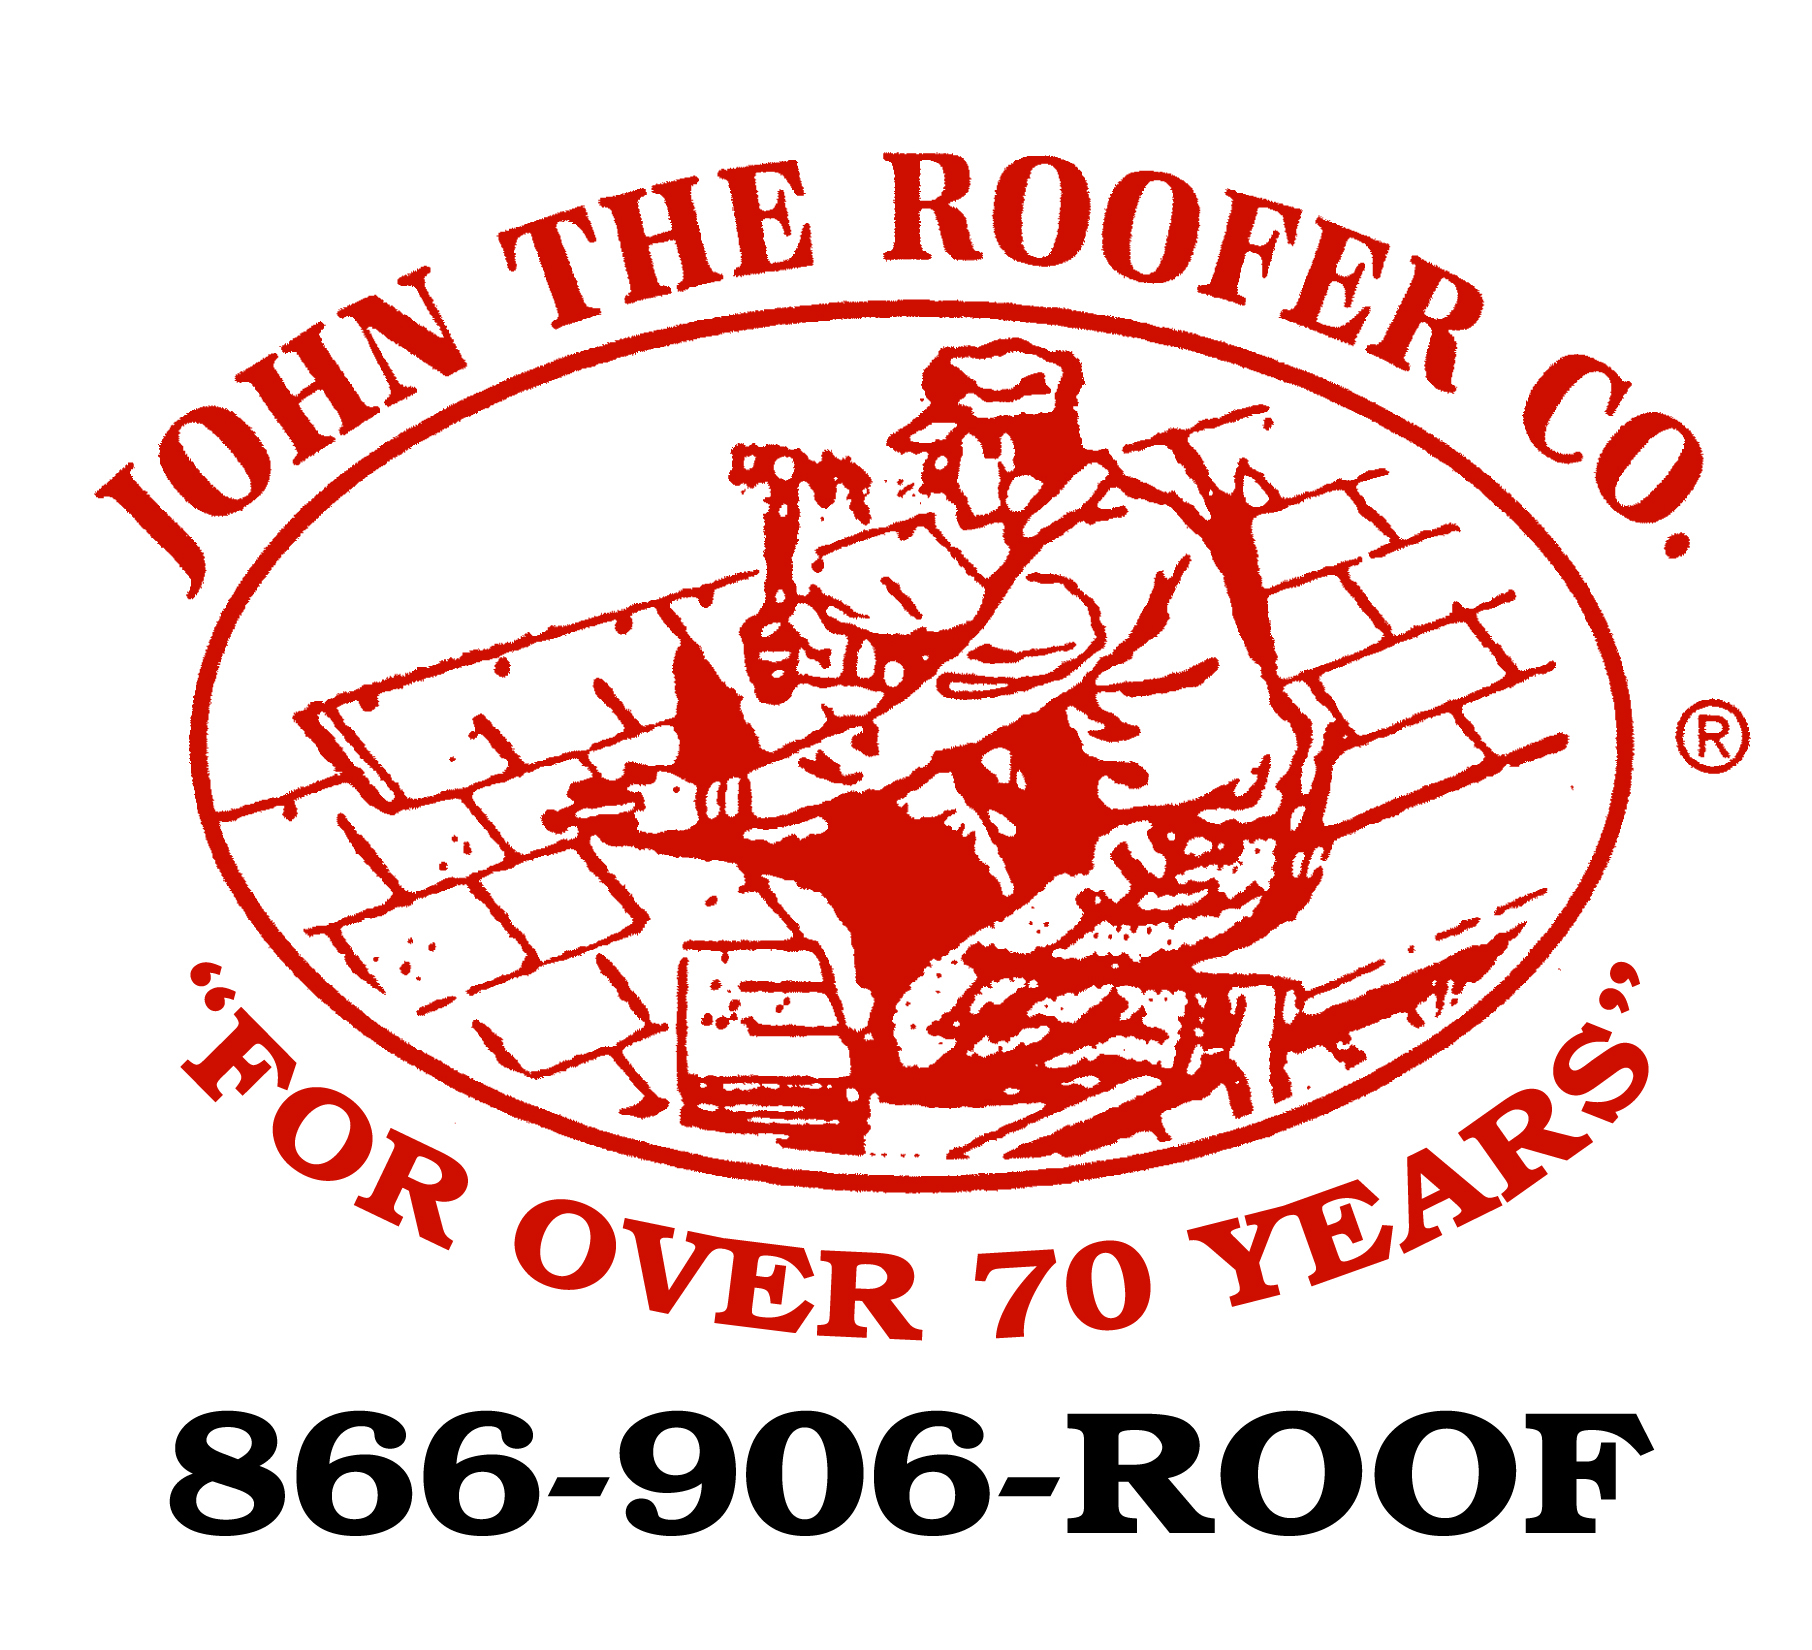 John the Roofer Logo w phone